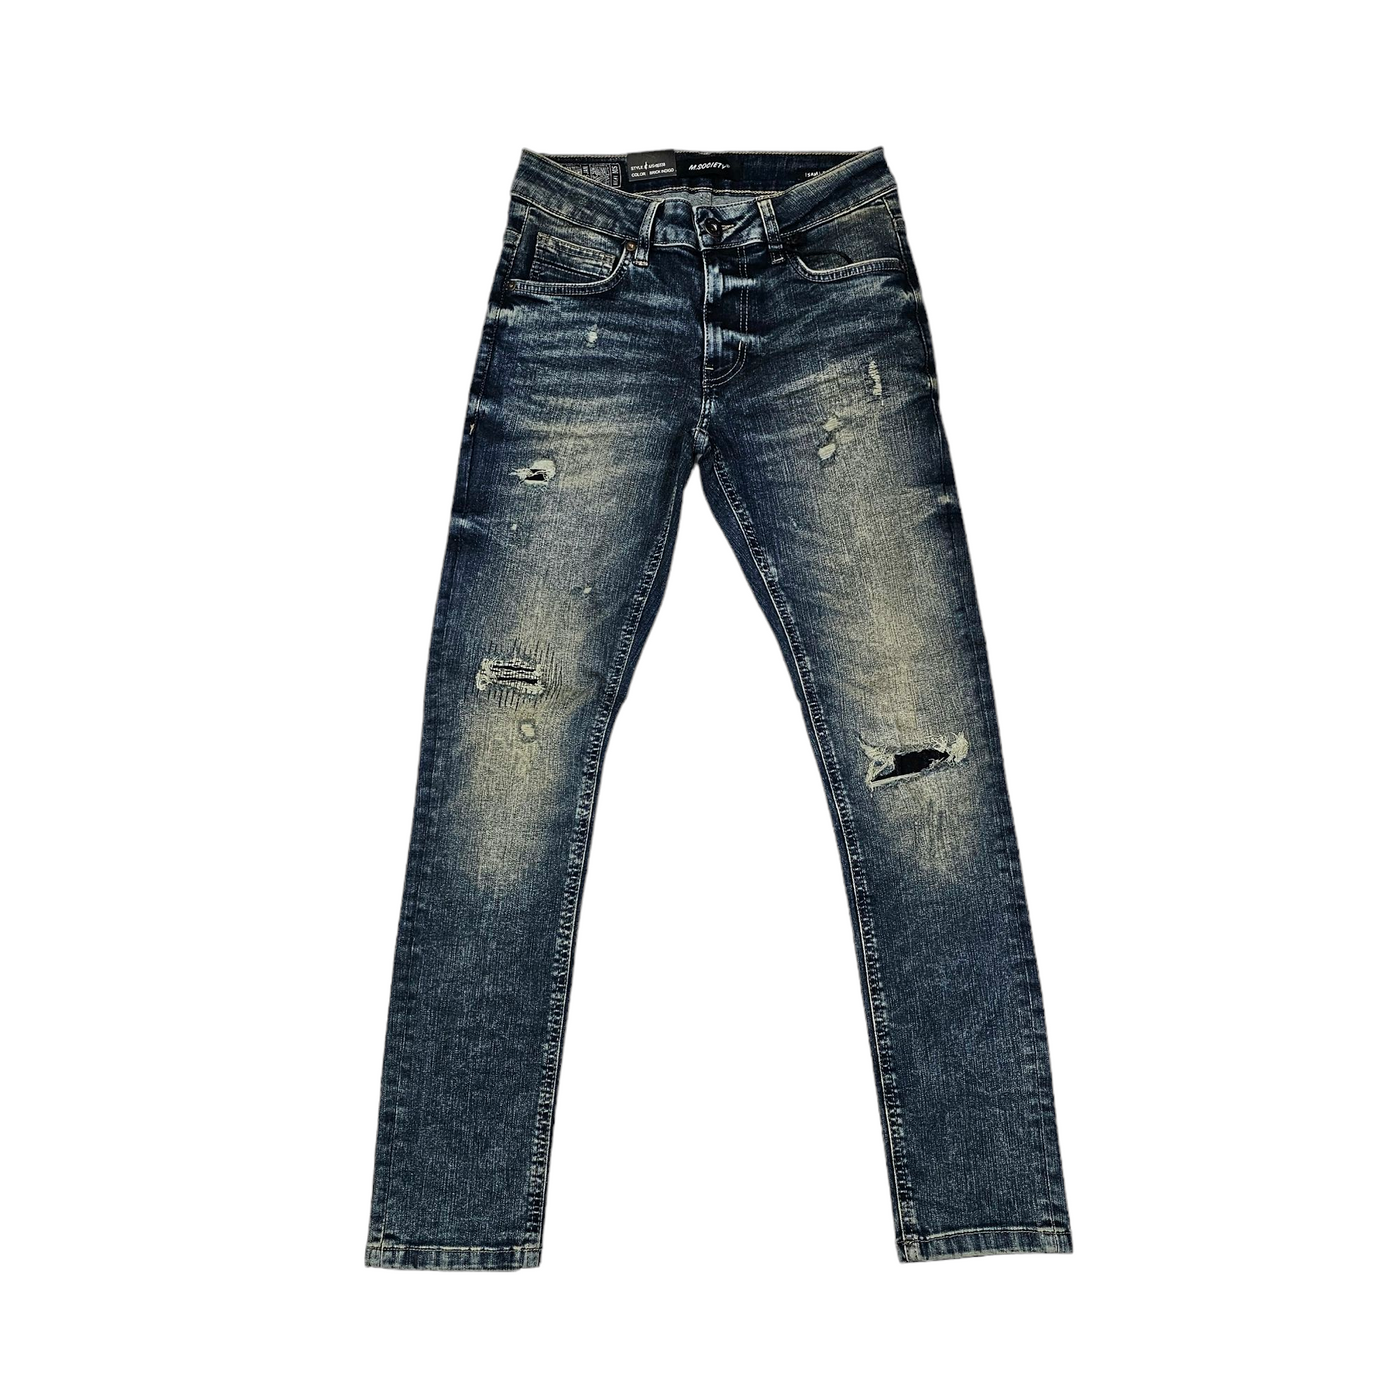 M. Society Men's Skinny Fit Jeans  Brick Indigo 80338